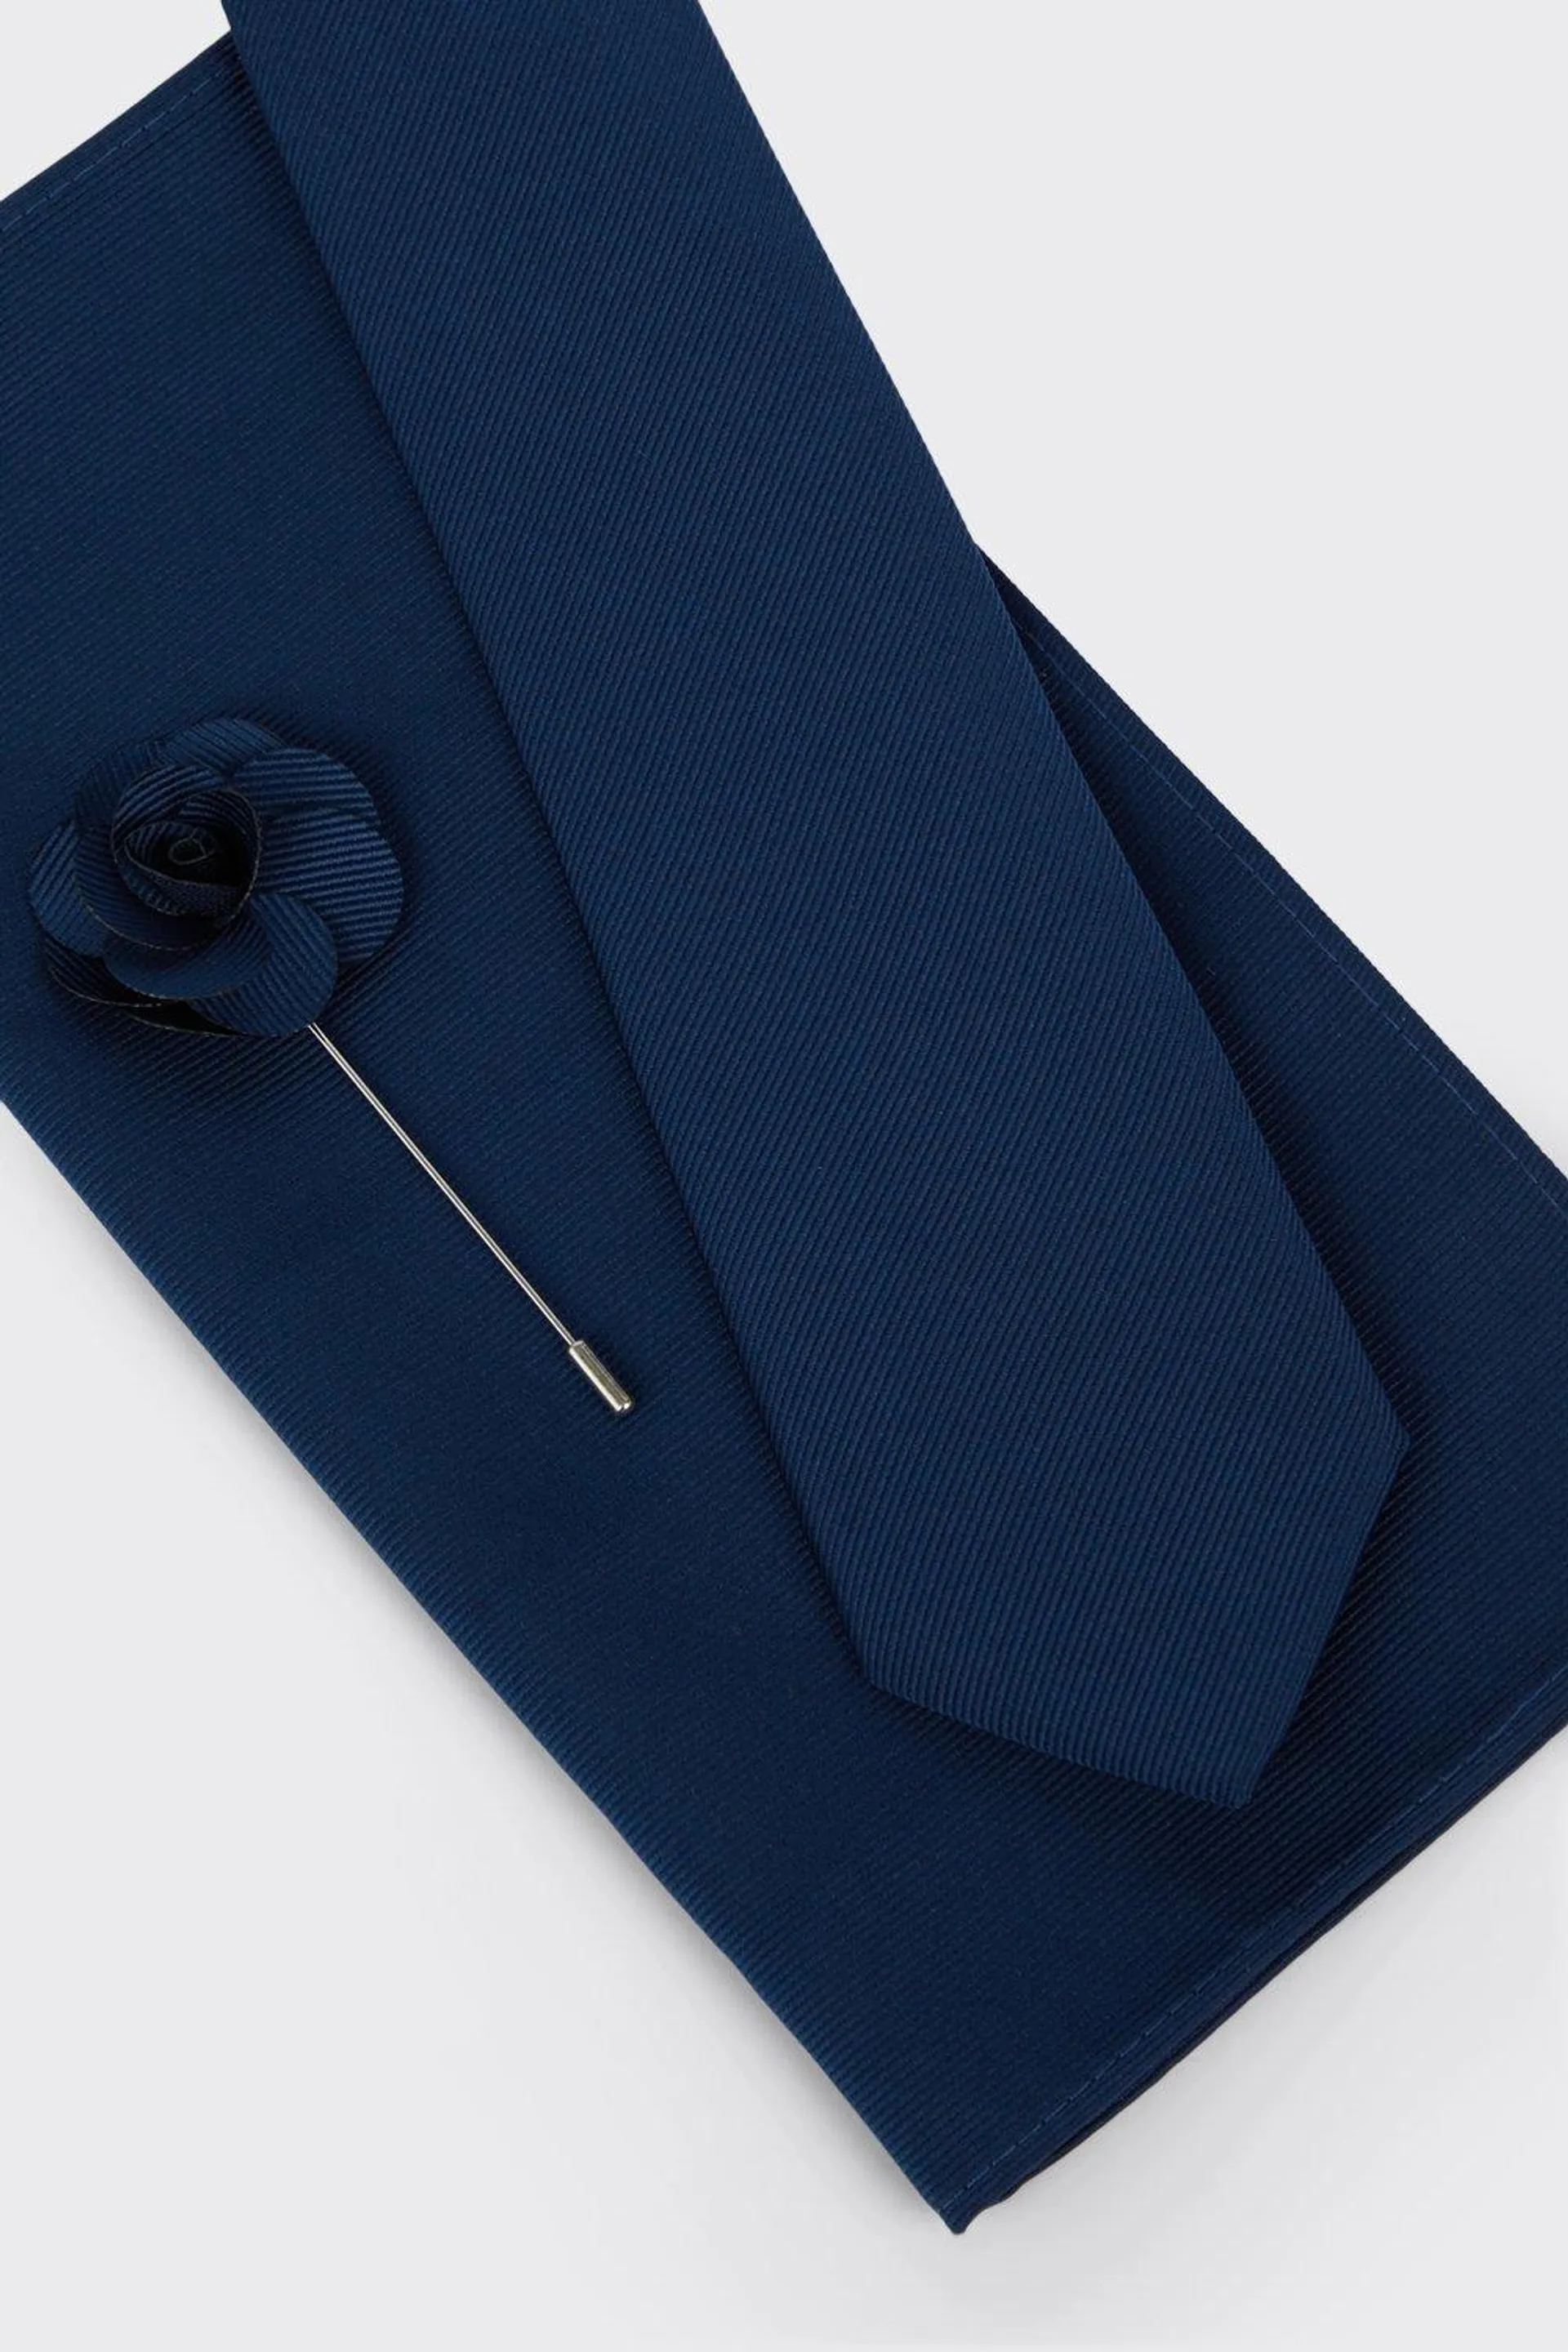 Navy Wedding Tie Set With Lapel Pin